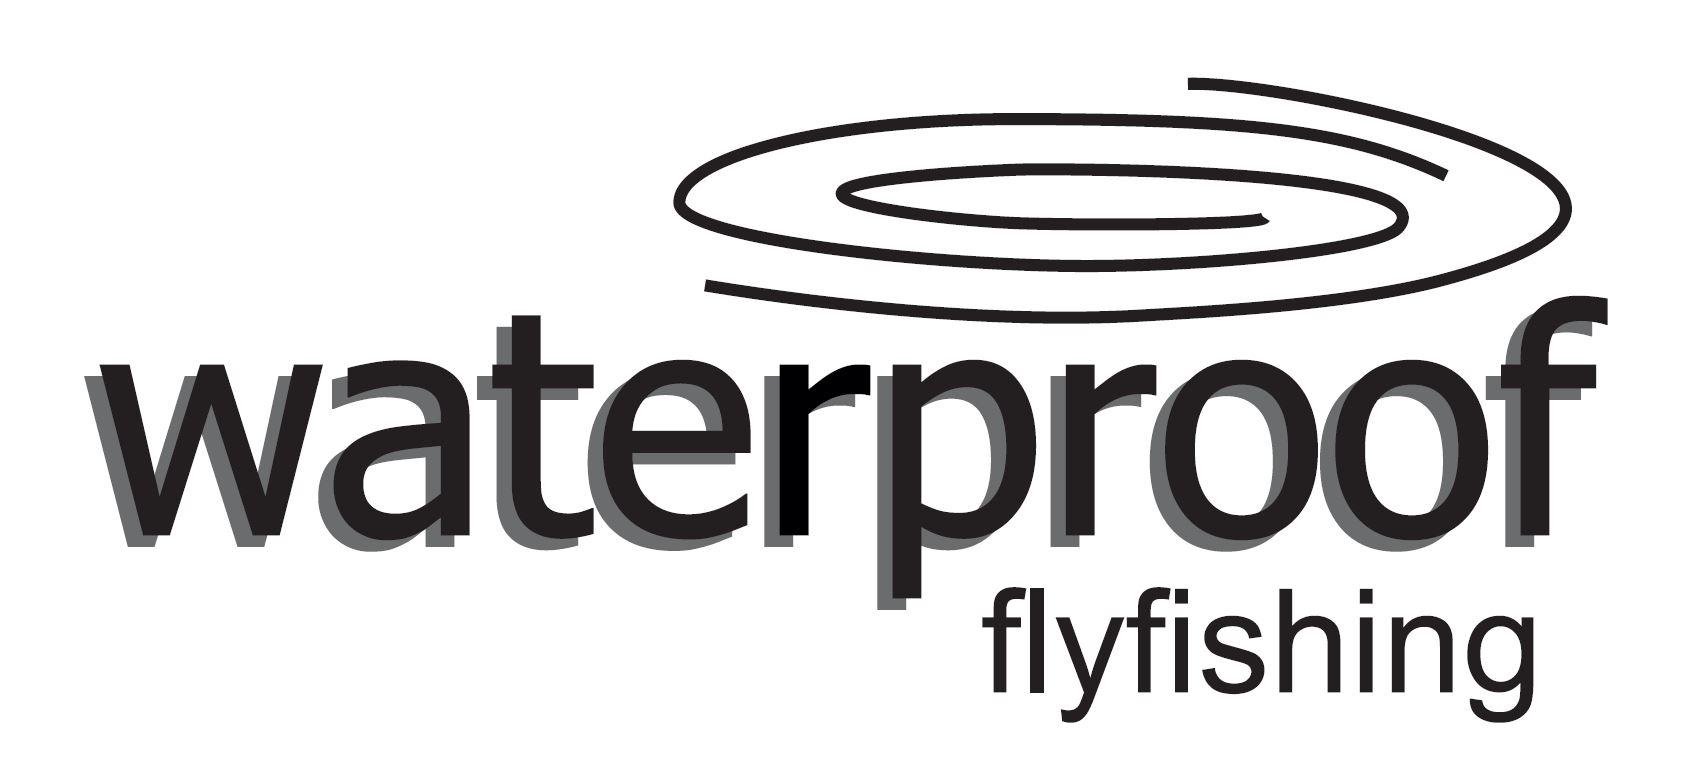 Waterproof flyfishing logo